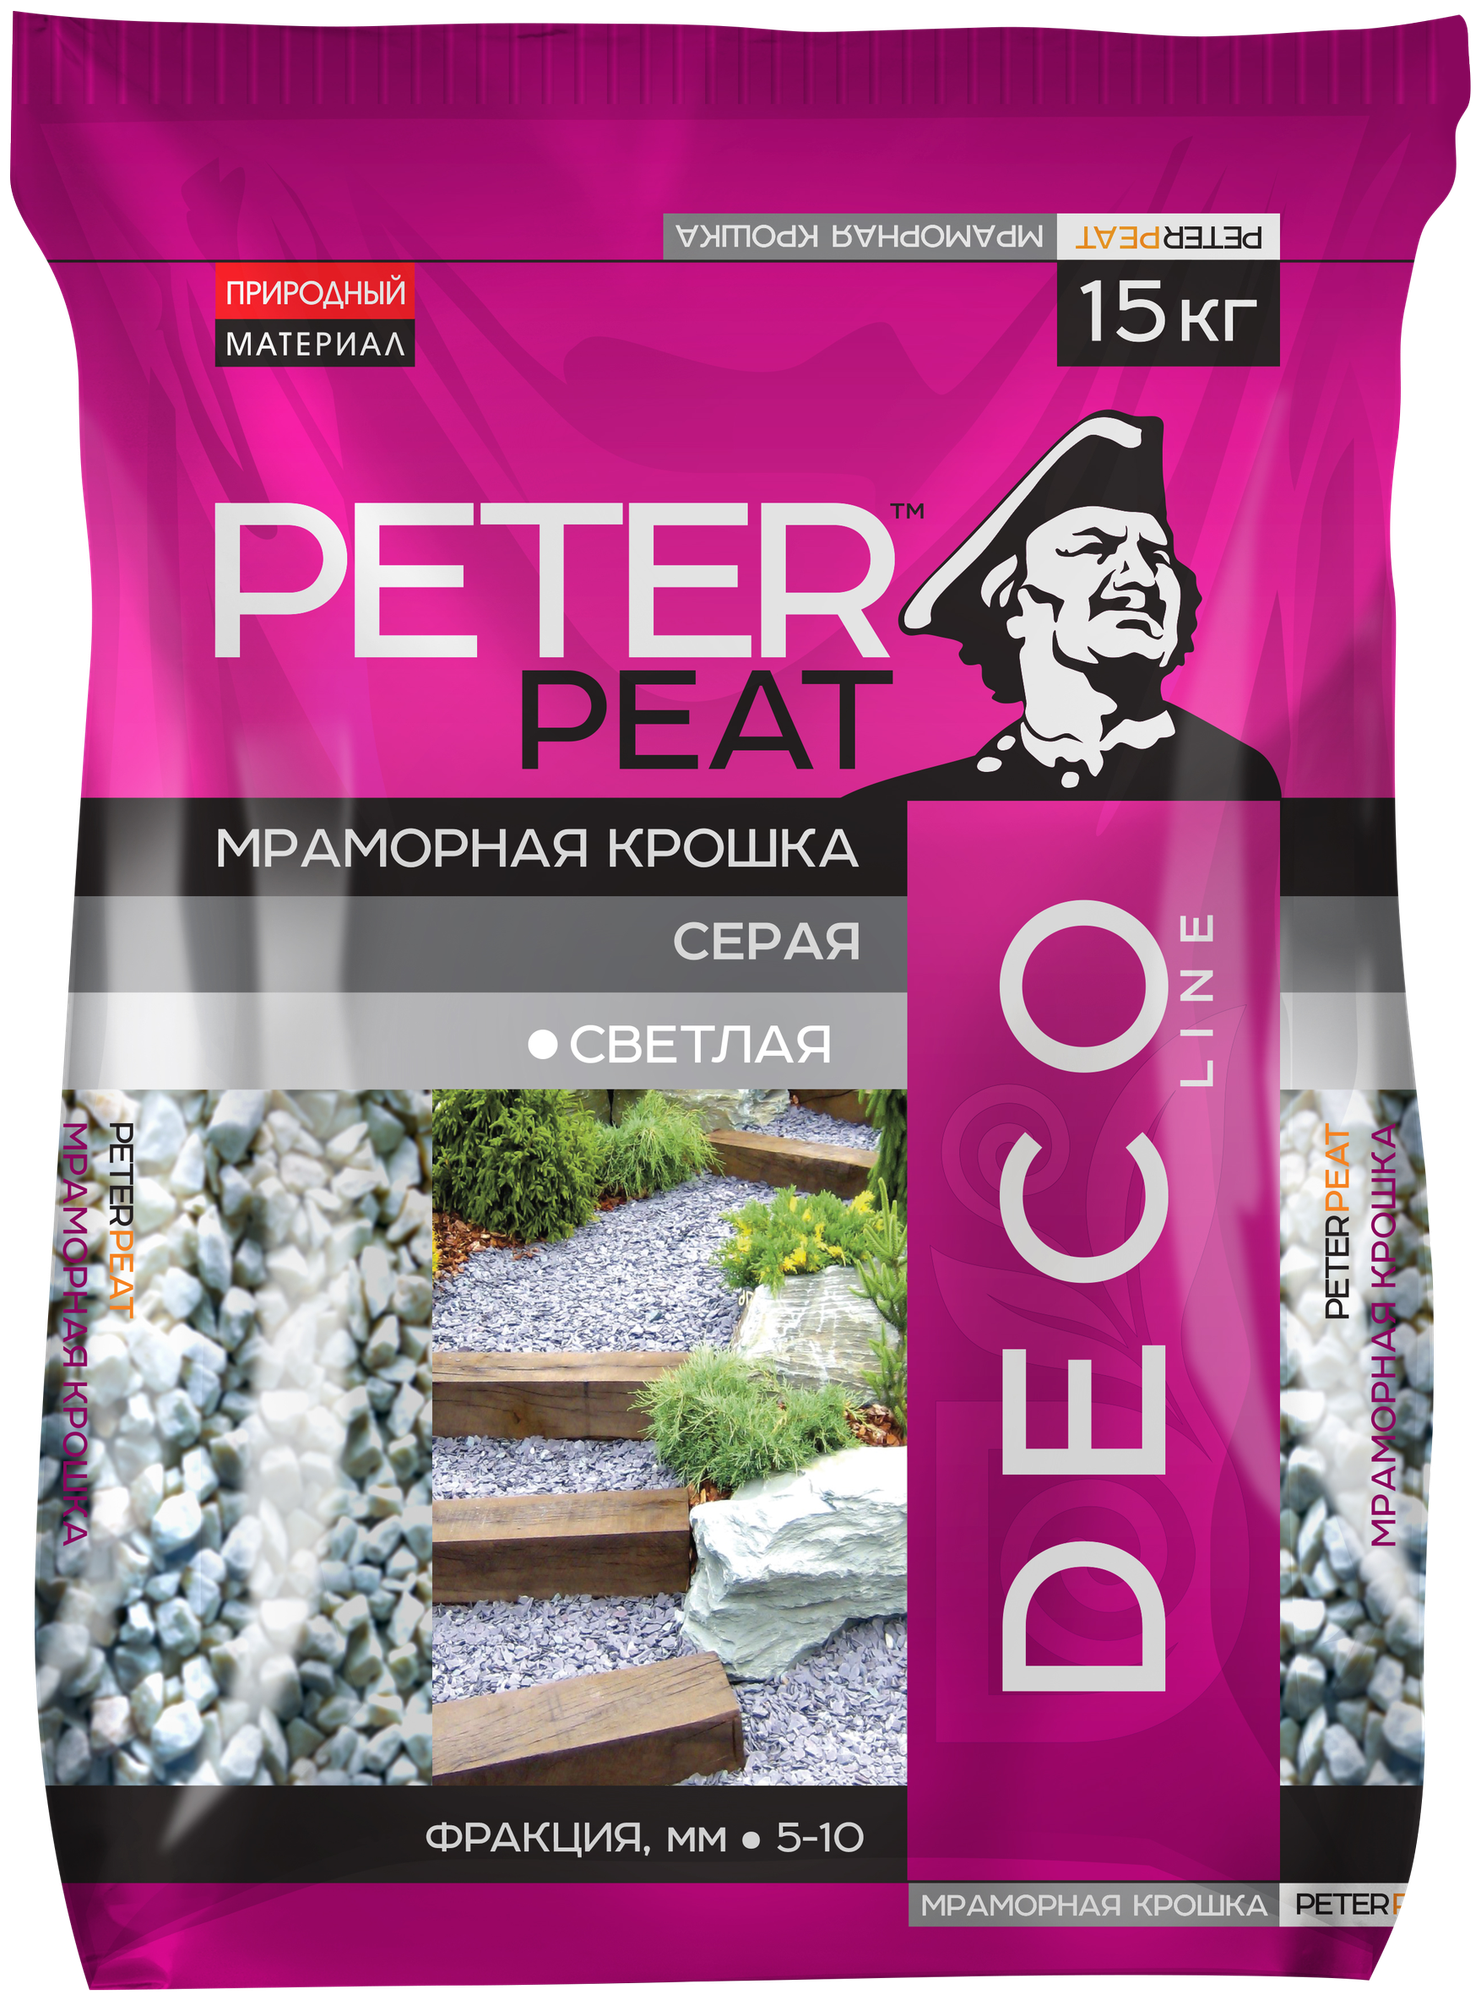 Мраморная крошка Peter Peat Deco 5-10 мм светло-серая 15 кг